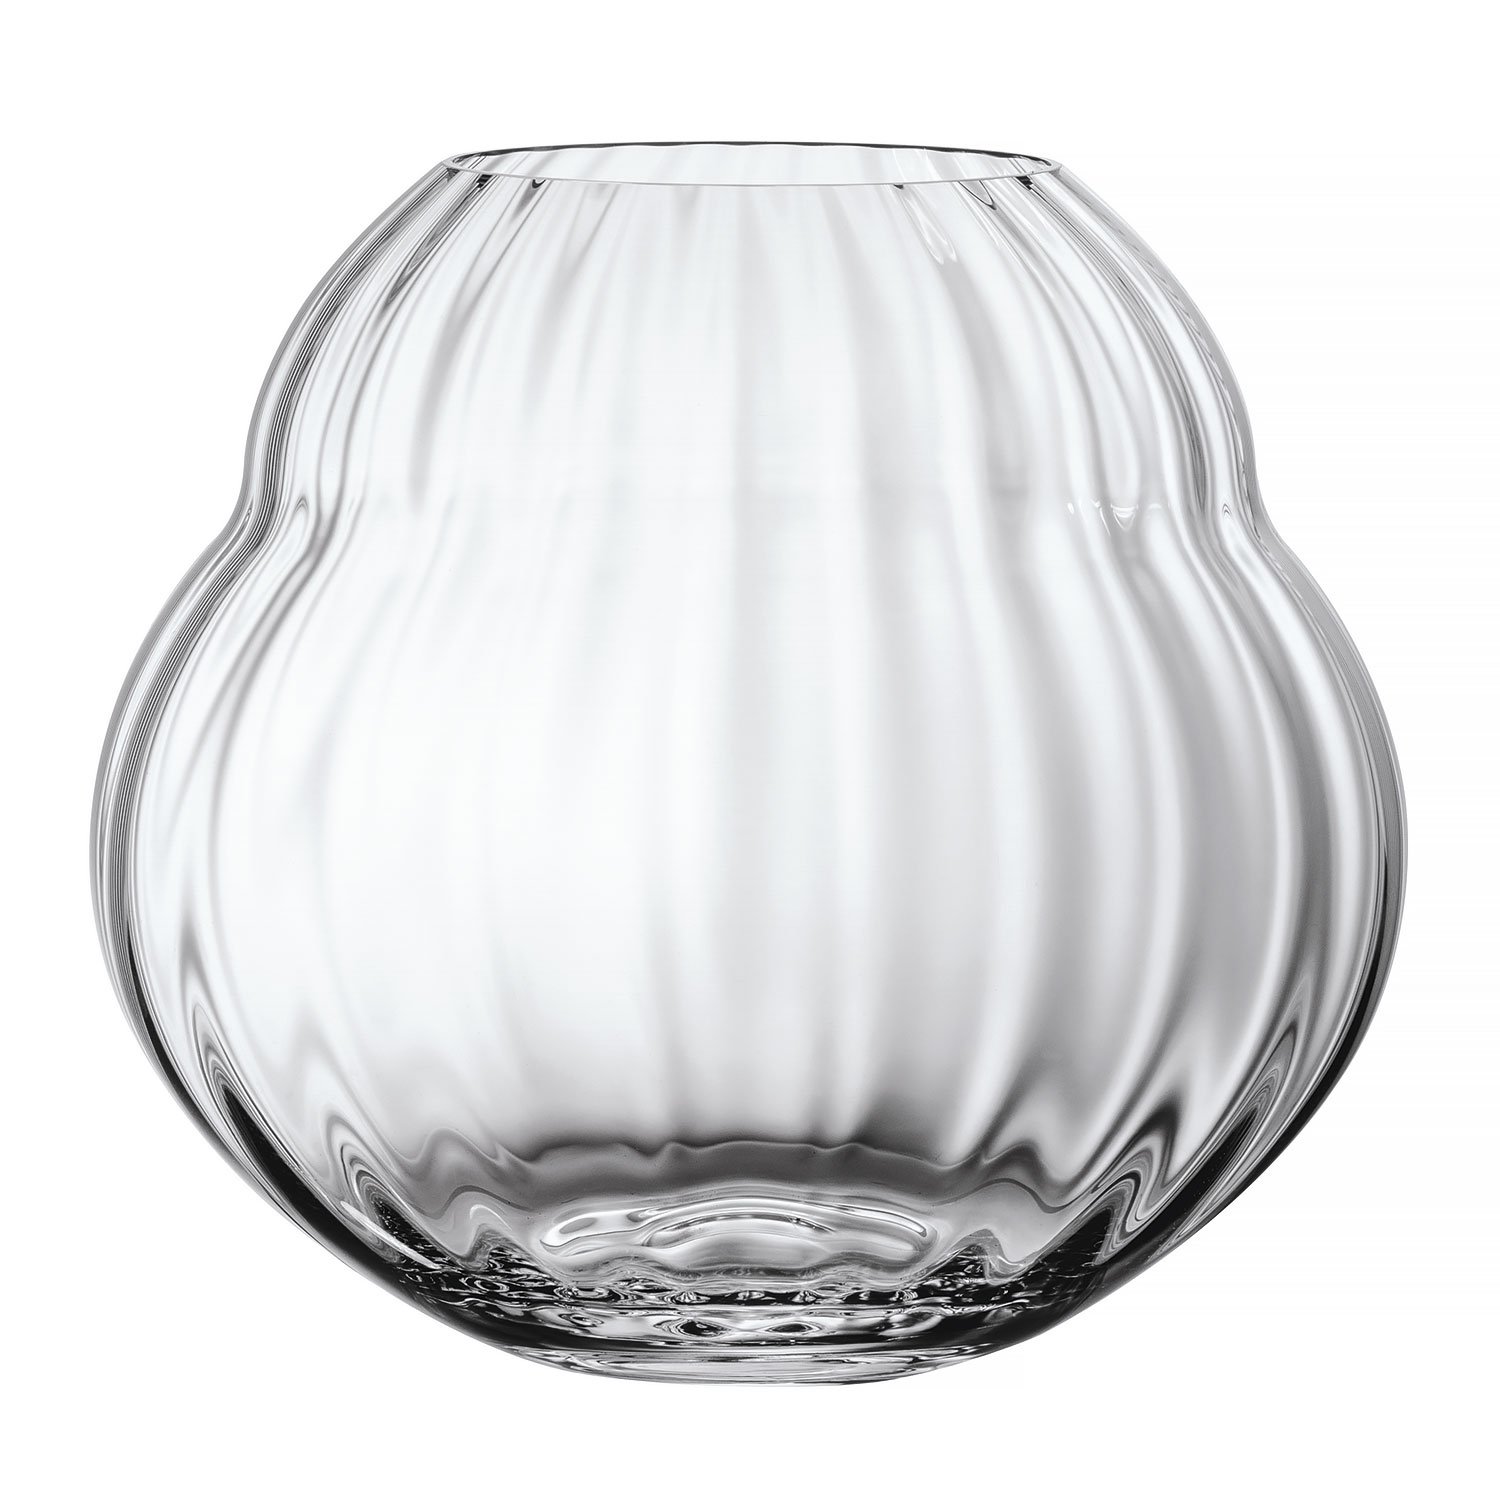 Rose Garden Glass Ваза/подсвечник 17 см  Villeroy & Boch
https://spb.v-b.ru
г.Санкт-Петербург
eshop@v-b.spb.ru
+7(812)3801977